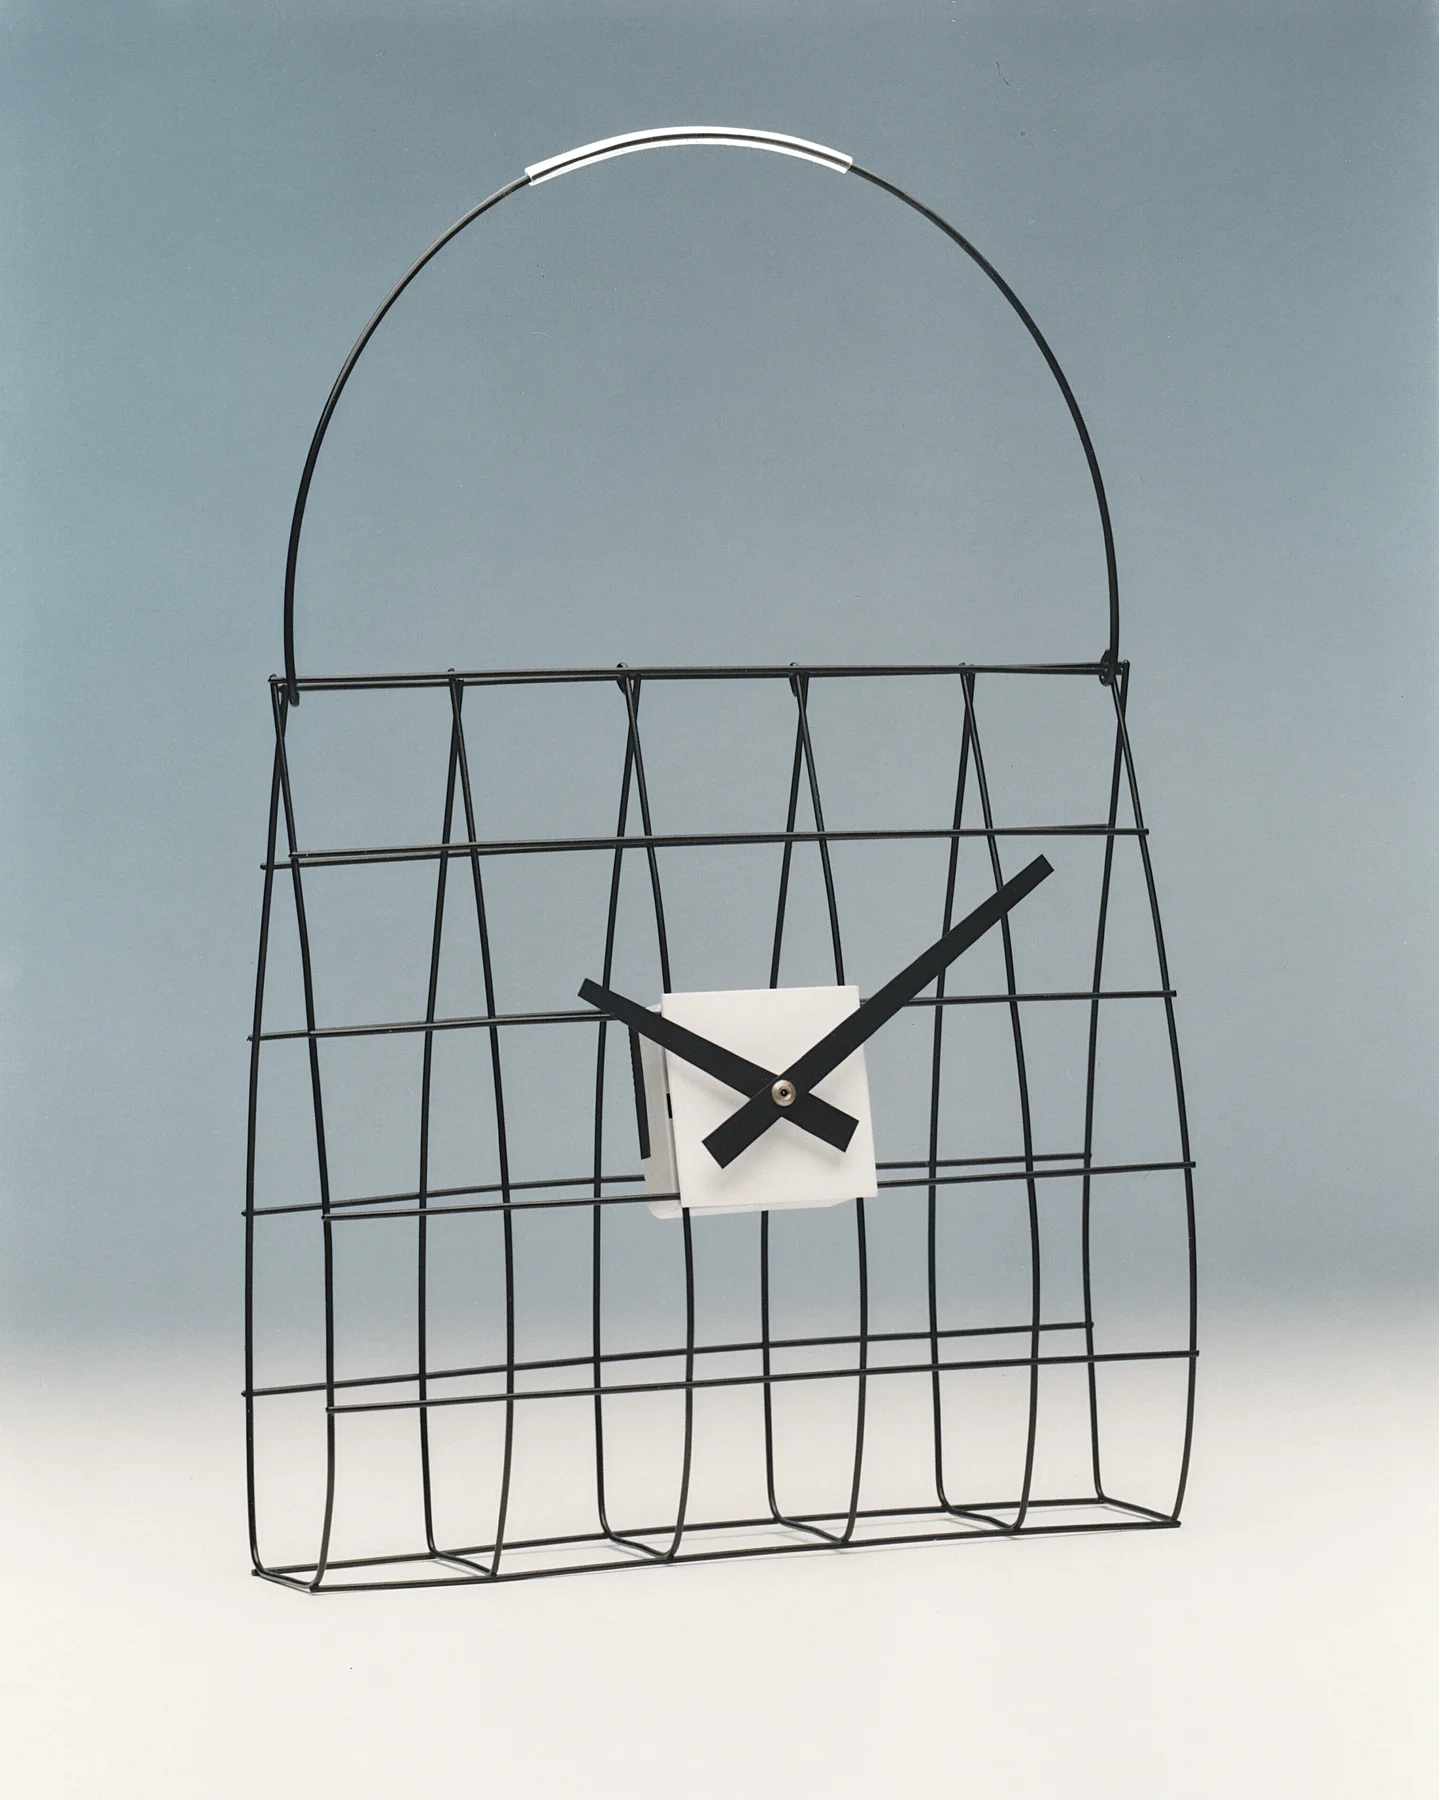 Taschenuhr desk/wall clock, Martin Kania Design